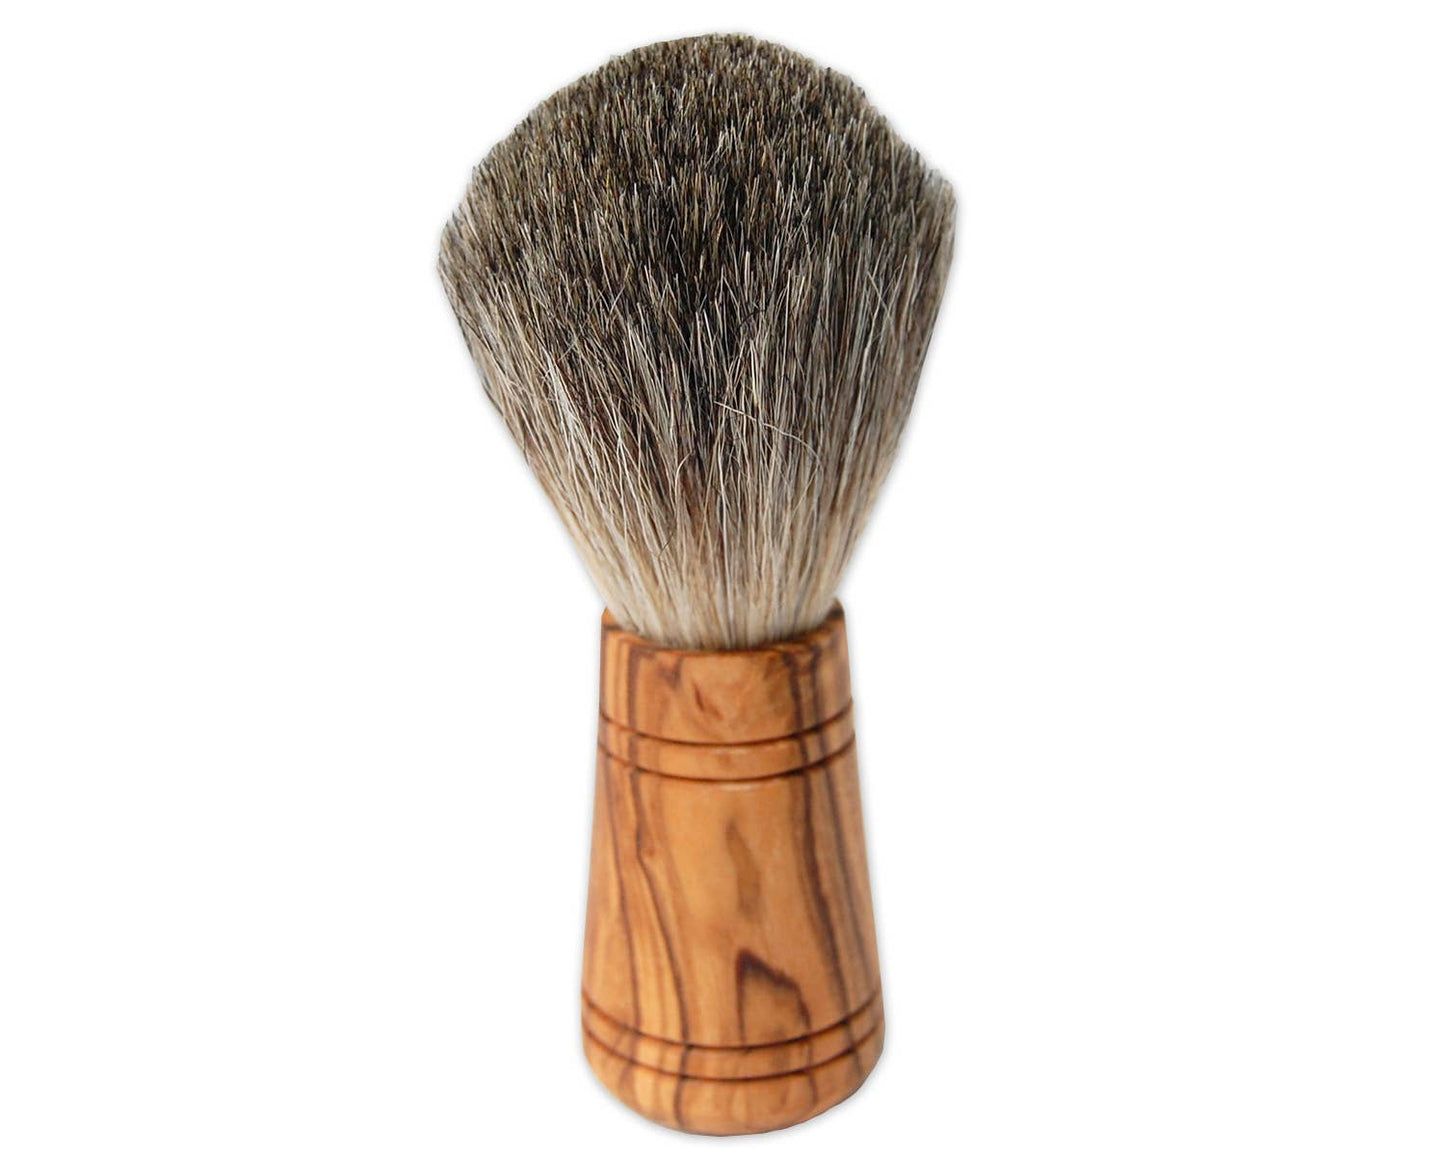 “Sir George” badger hair shaving brush with olive wood handle